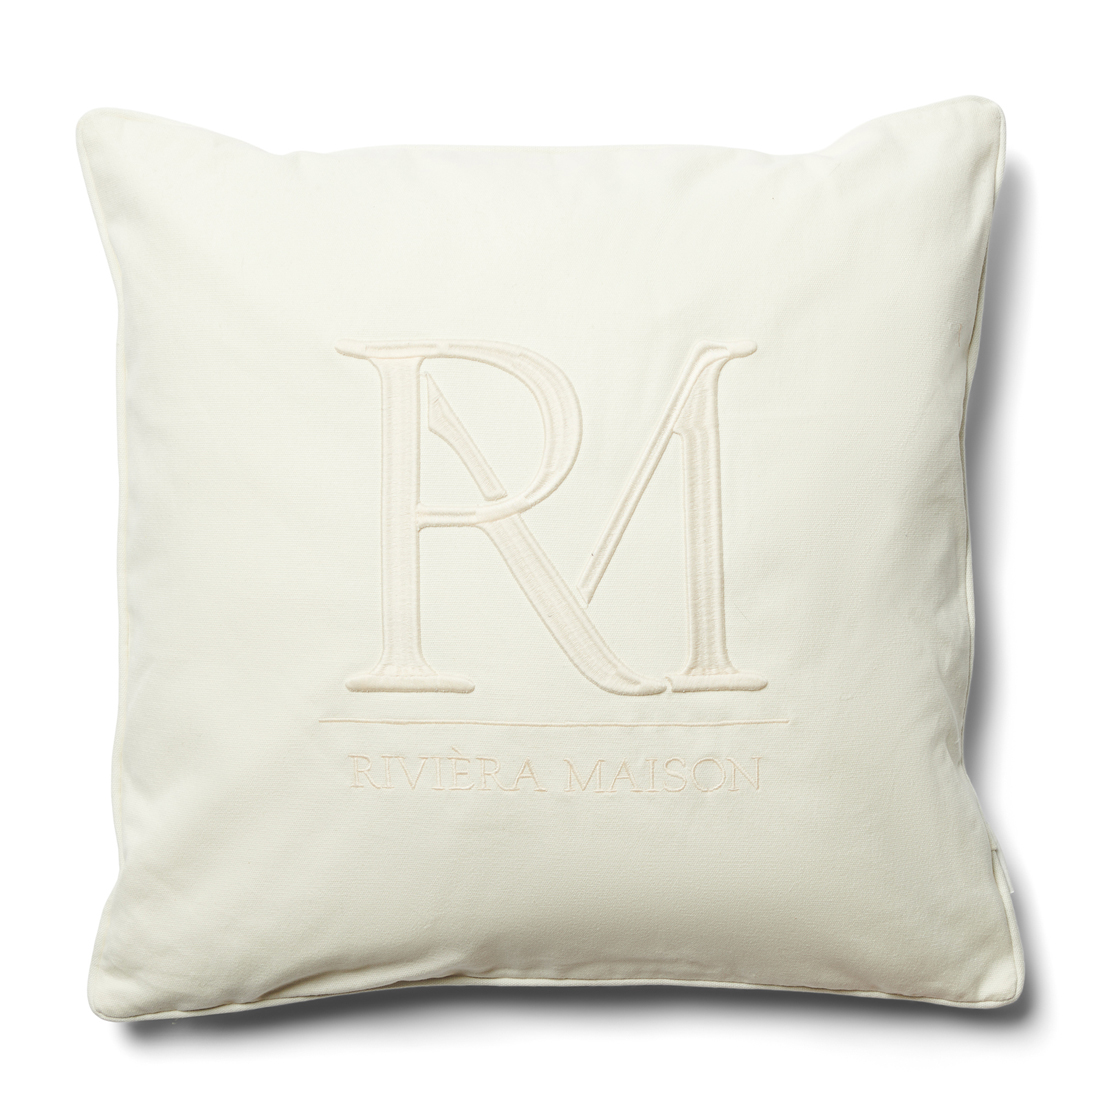 Riviera Maison kussenhoes, Kussensloop 50x50, Sierkussen RM logo - RM Monogram Pillow Cover - Wit - Katoen